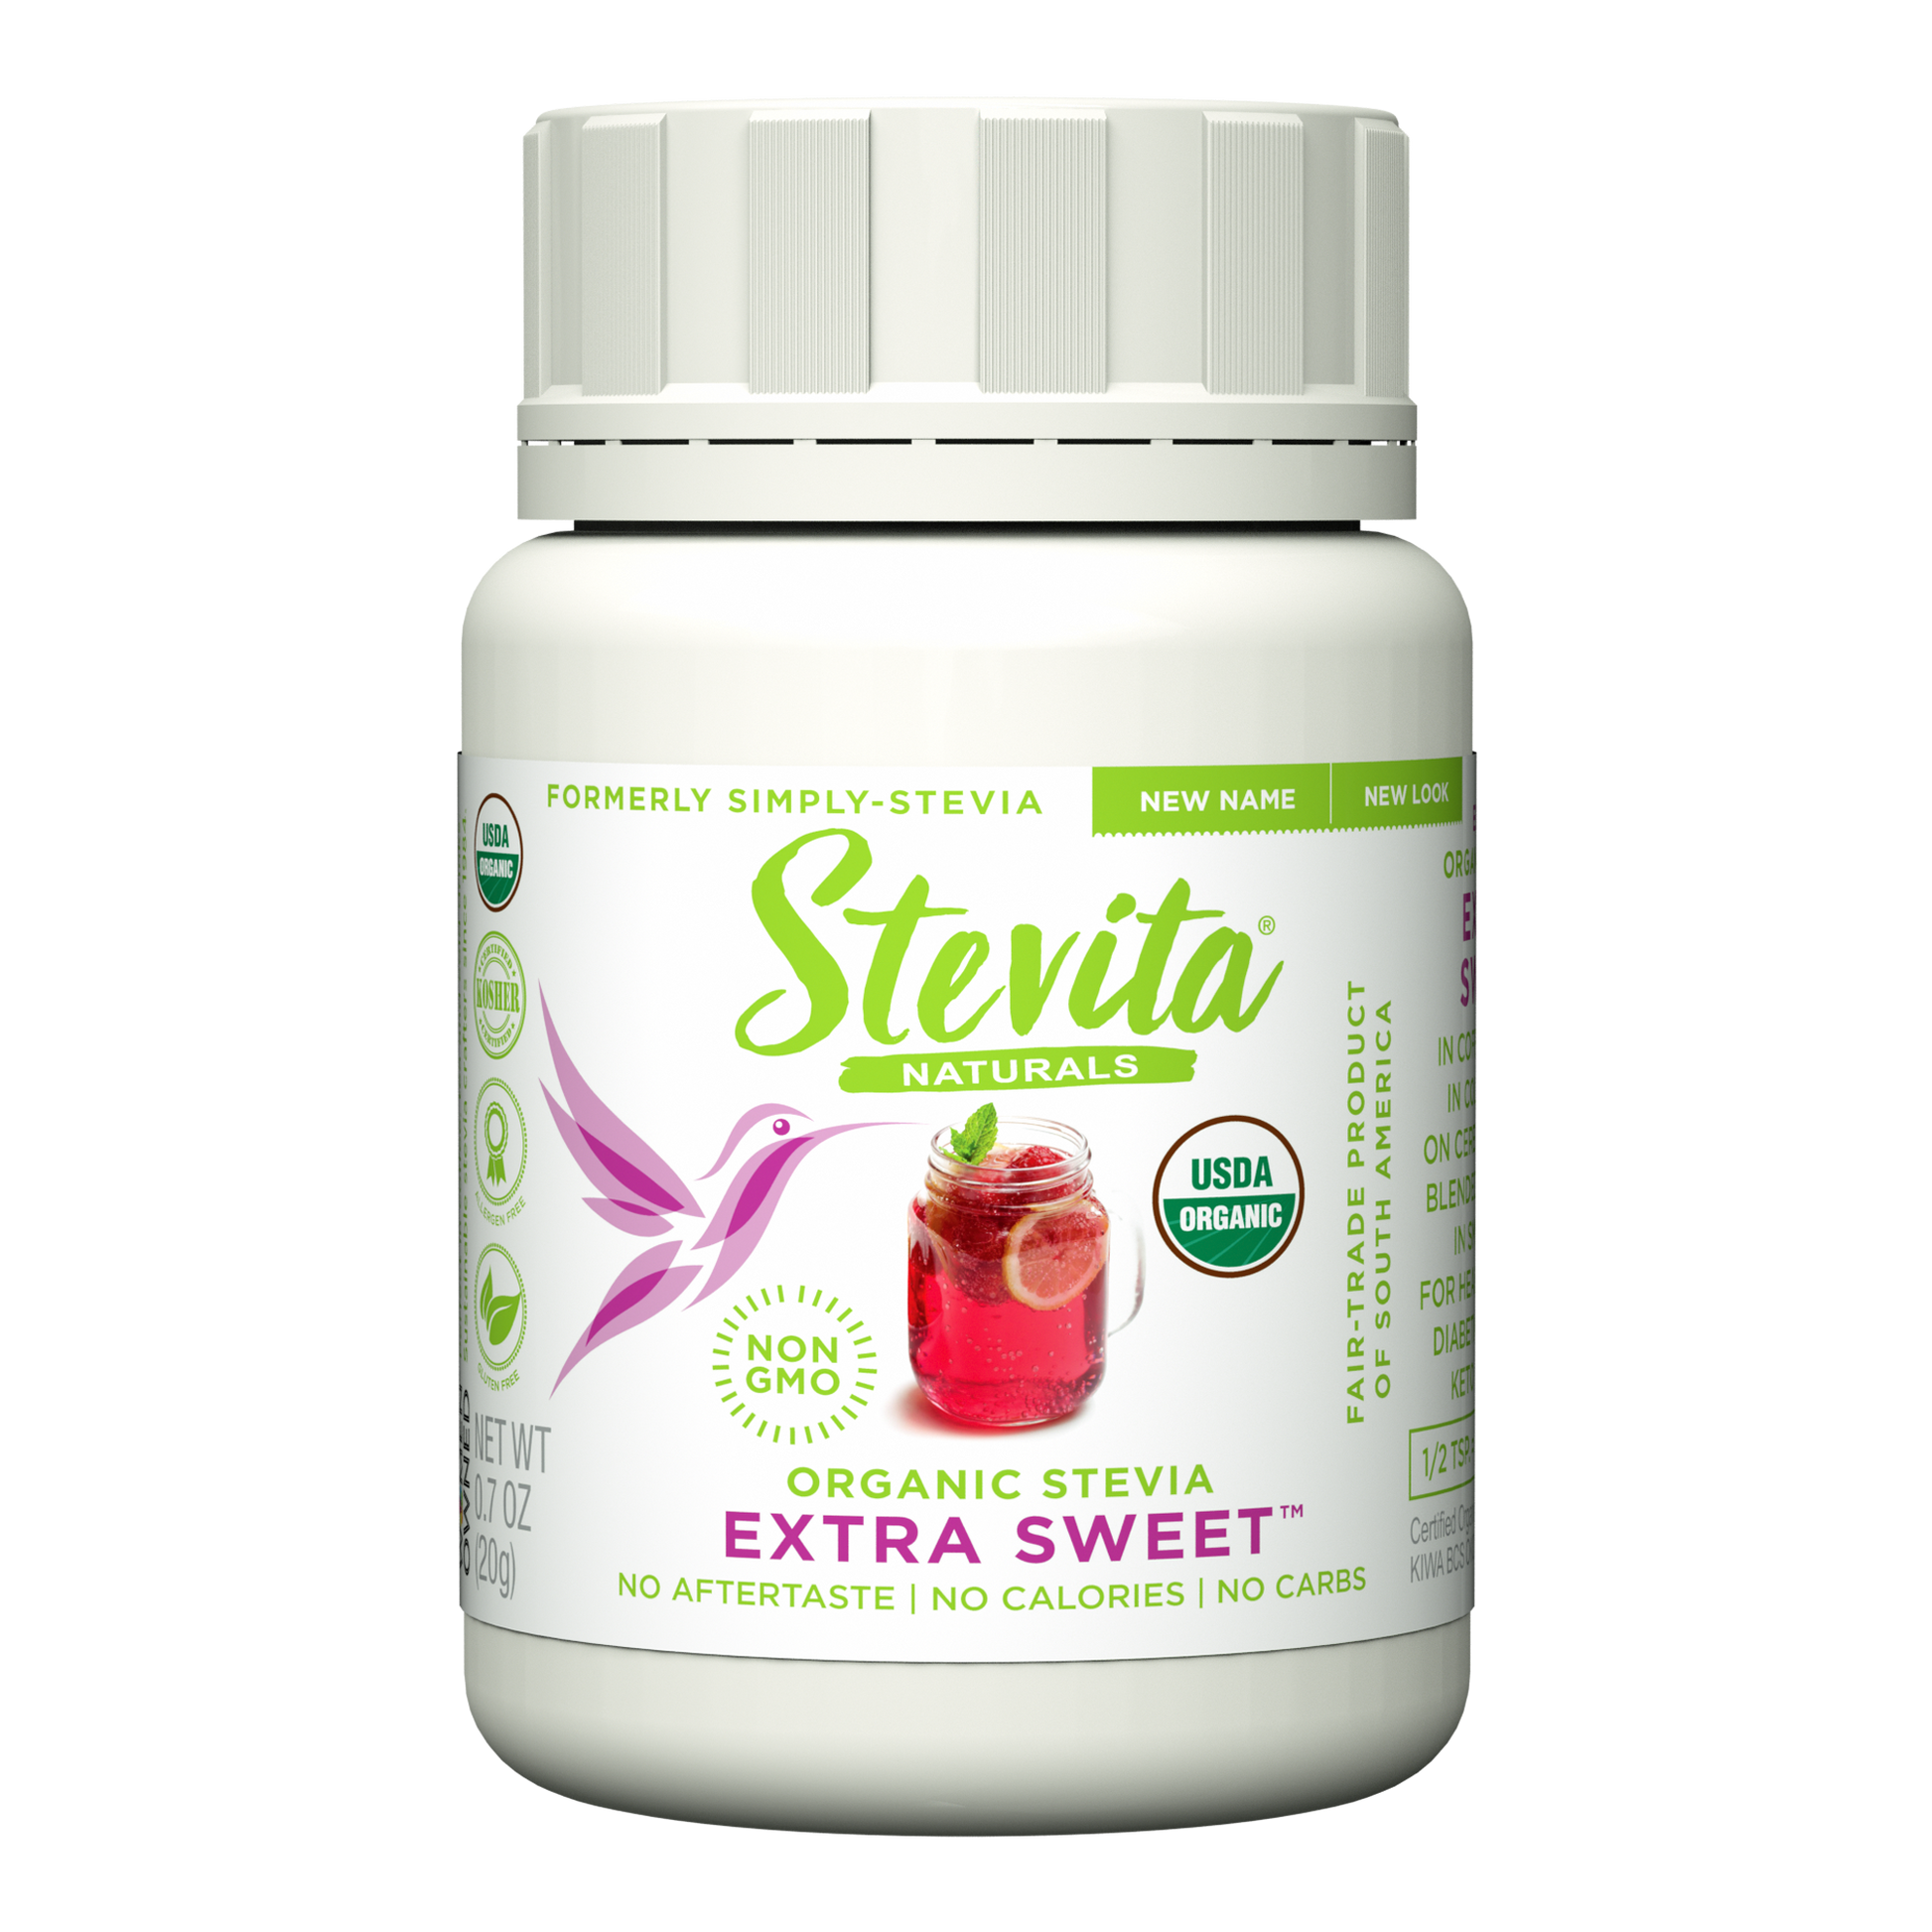 1-Extra Sweet Organic Pure Stevia Jar, Sugar-Free Naturally Sweetened